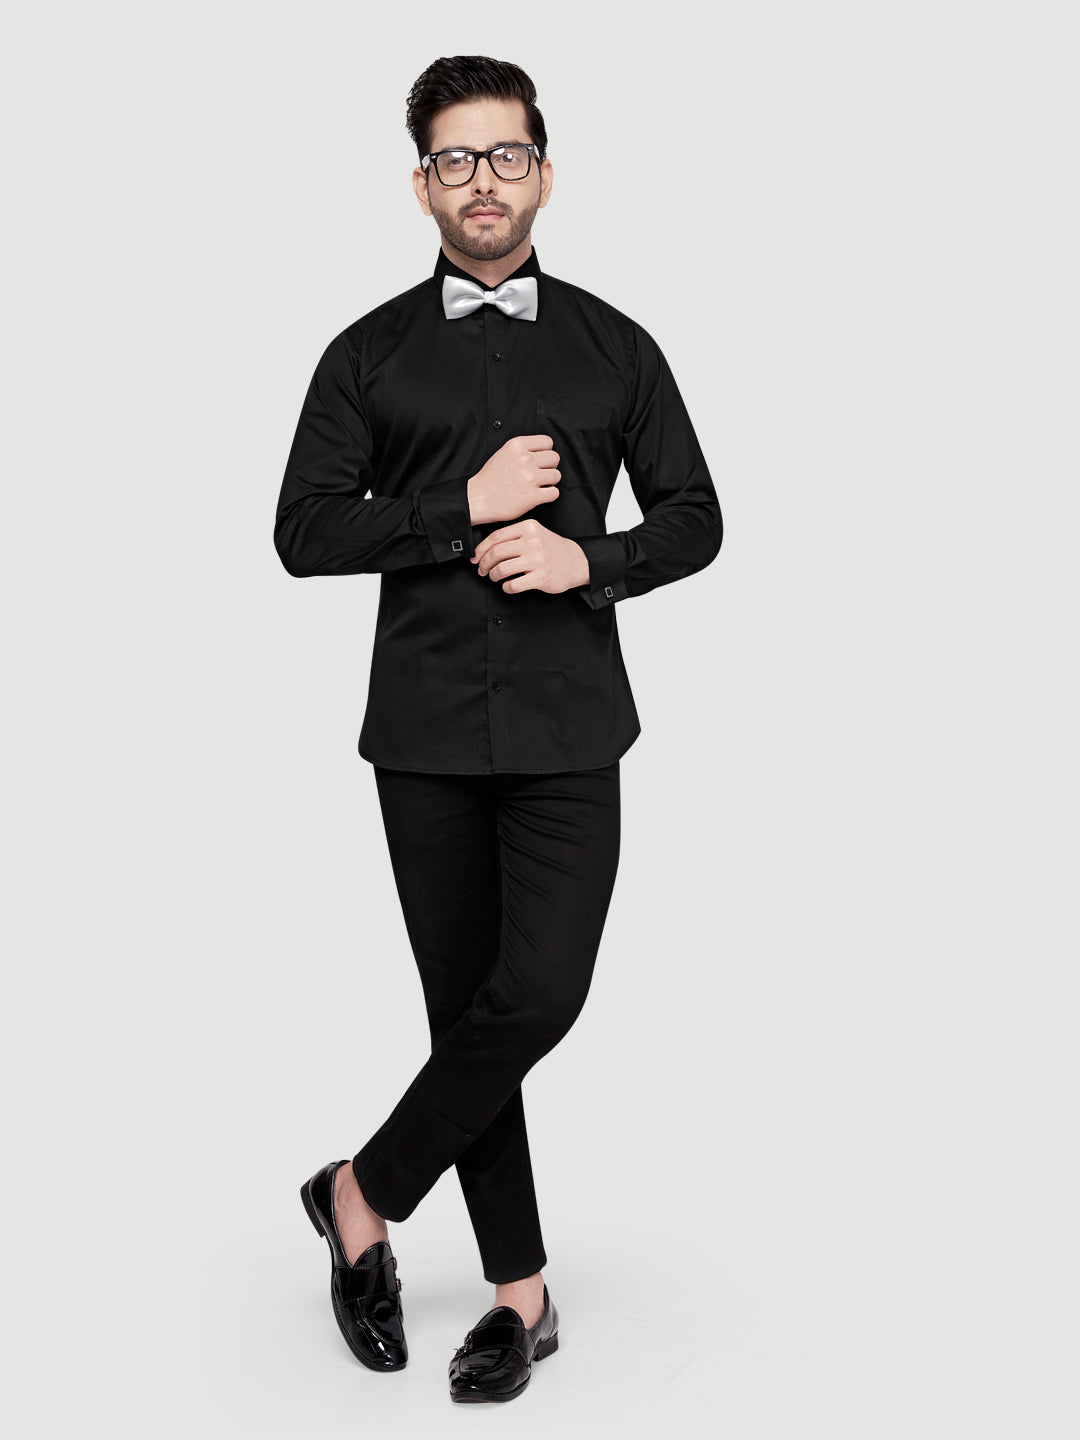 Black and White Shirts Men's Formal Cufflink Shirt Black w bow